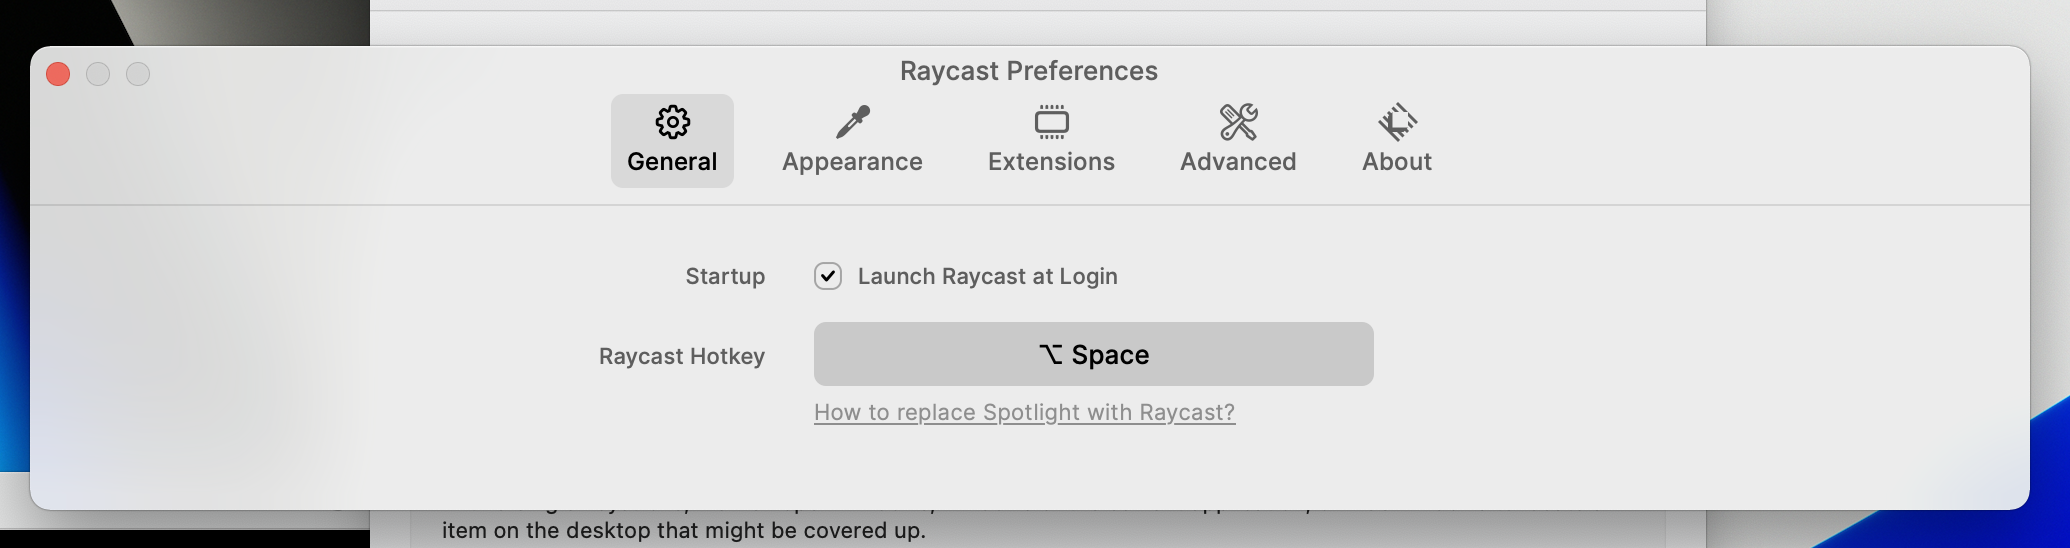 raycast